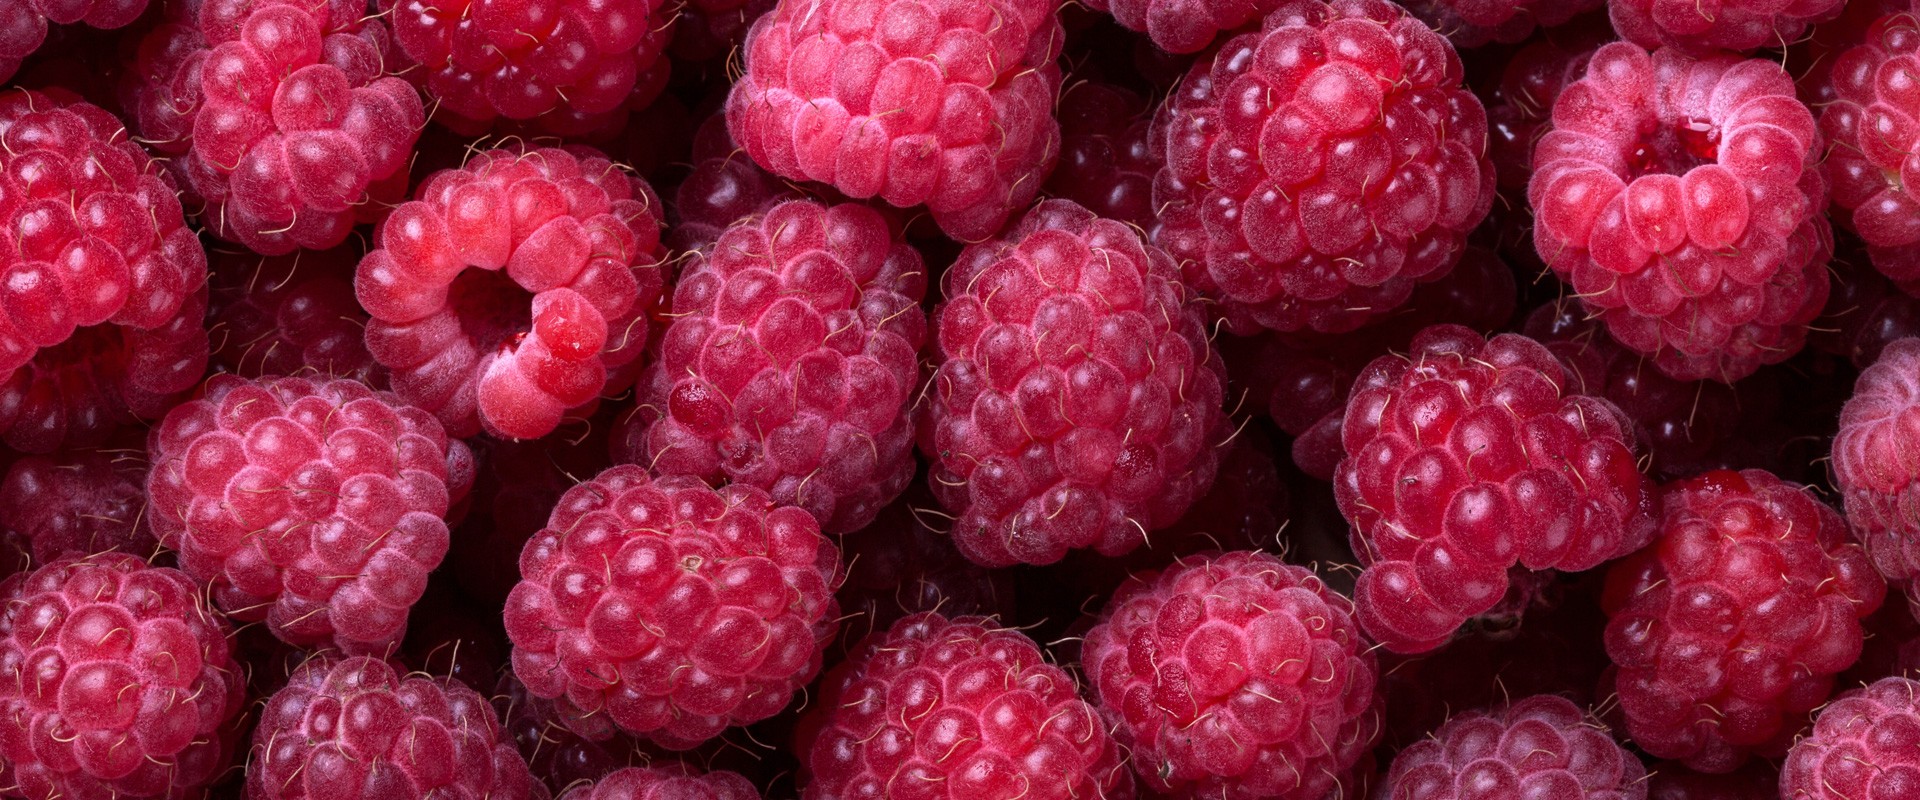 Raspberries-Product